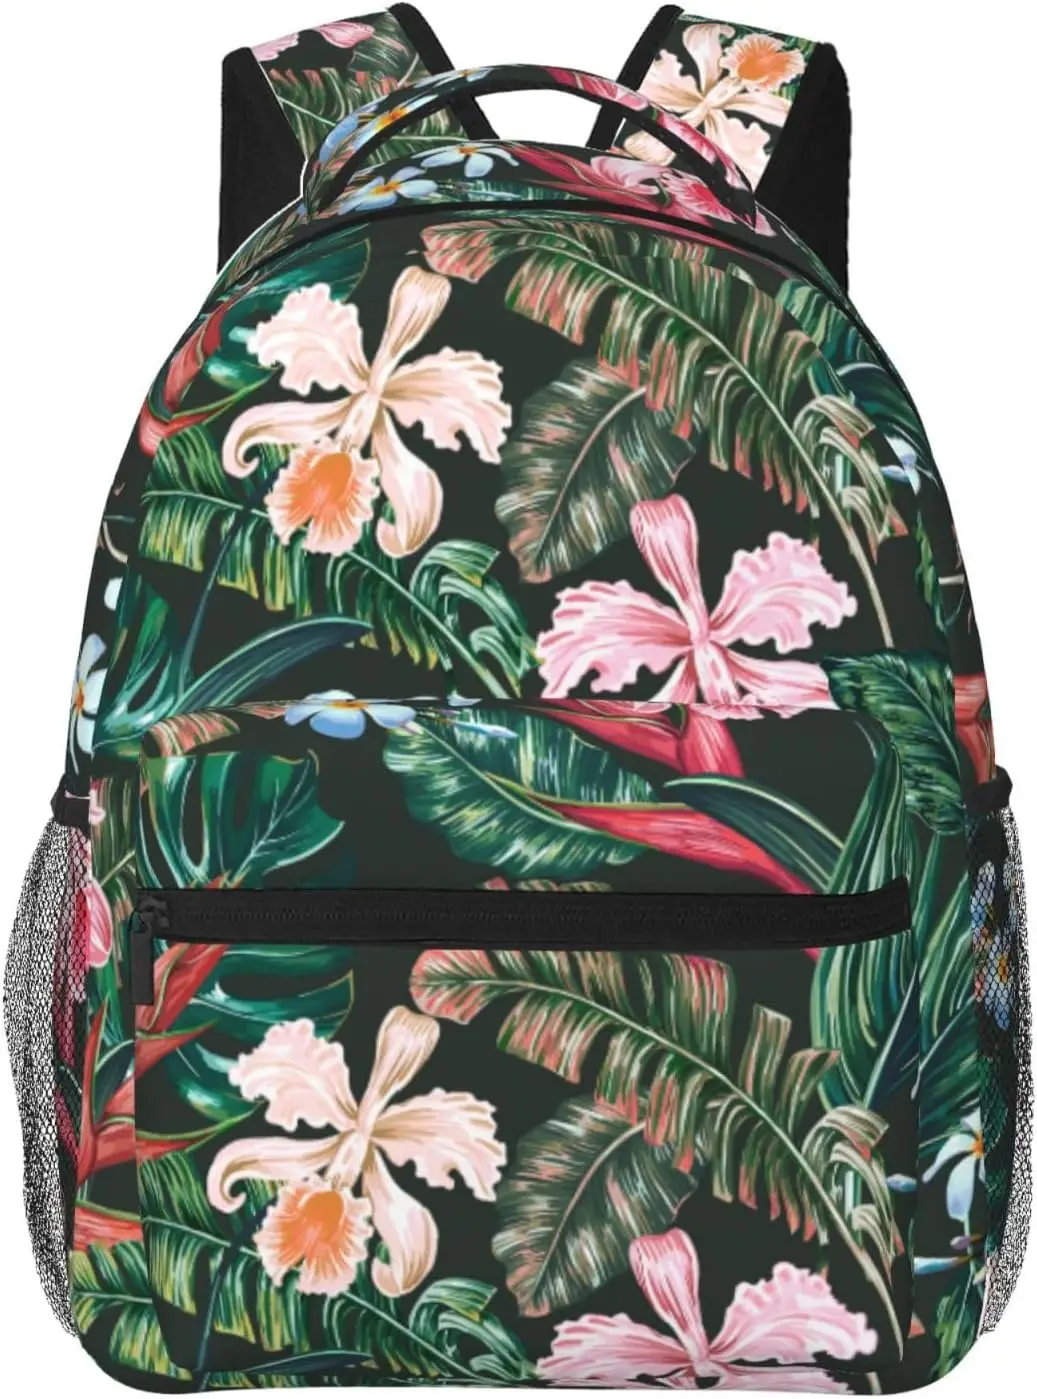 

Tropical Exotic Flower Palm Leaf Orchid Lightweight Laptop Backpack for Women Men College Bookbag Casual Daypack Travel Bag